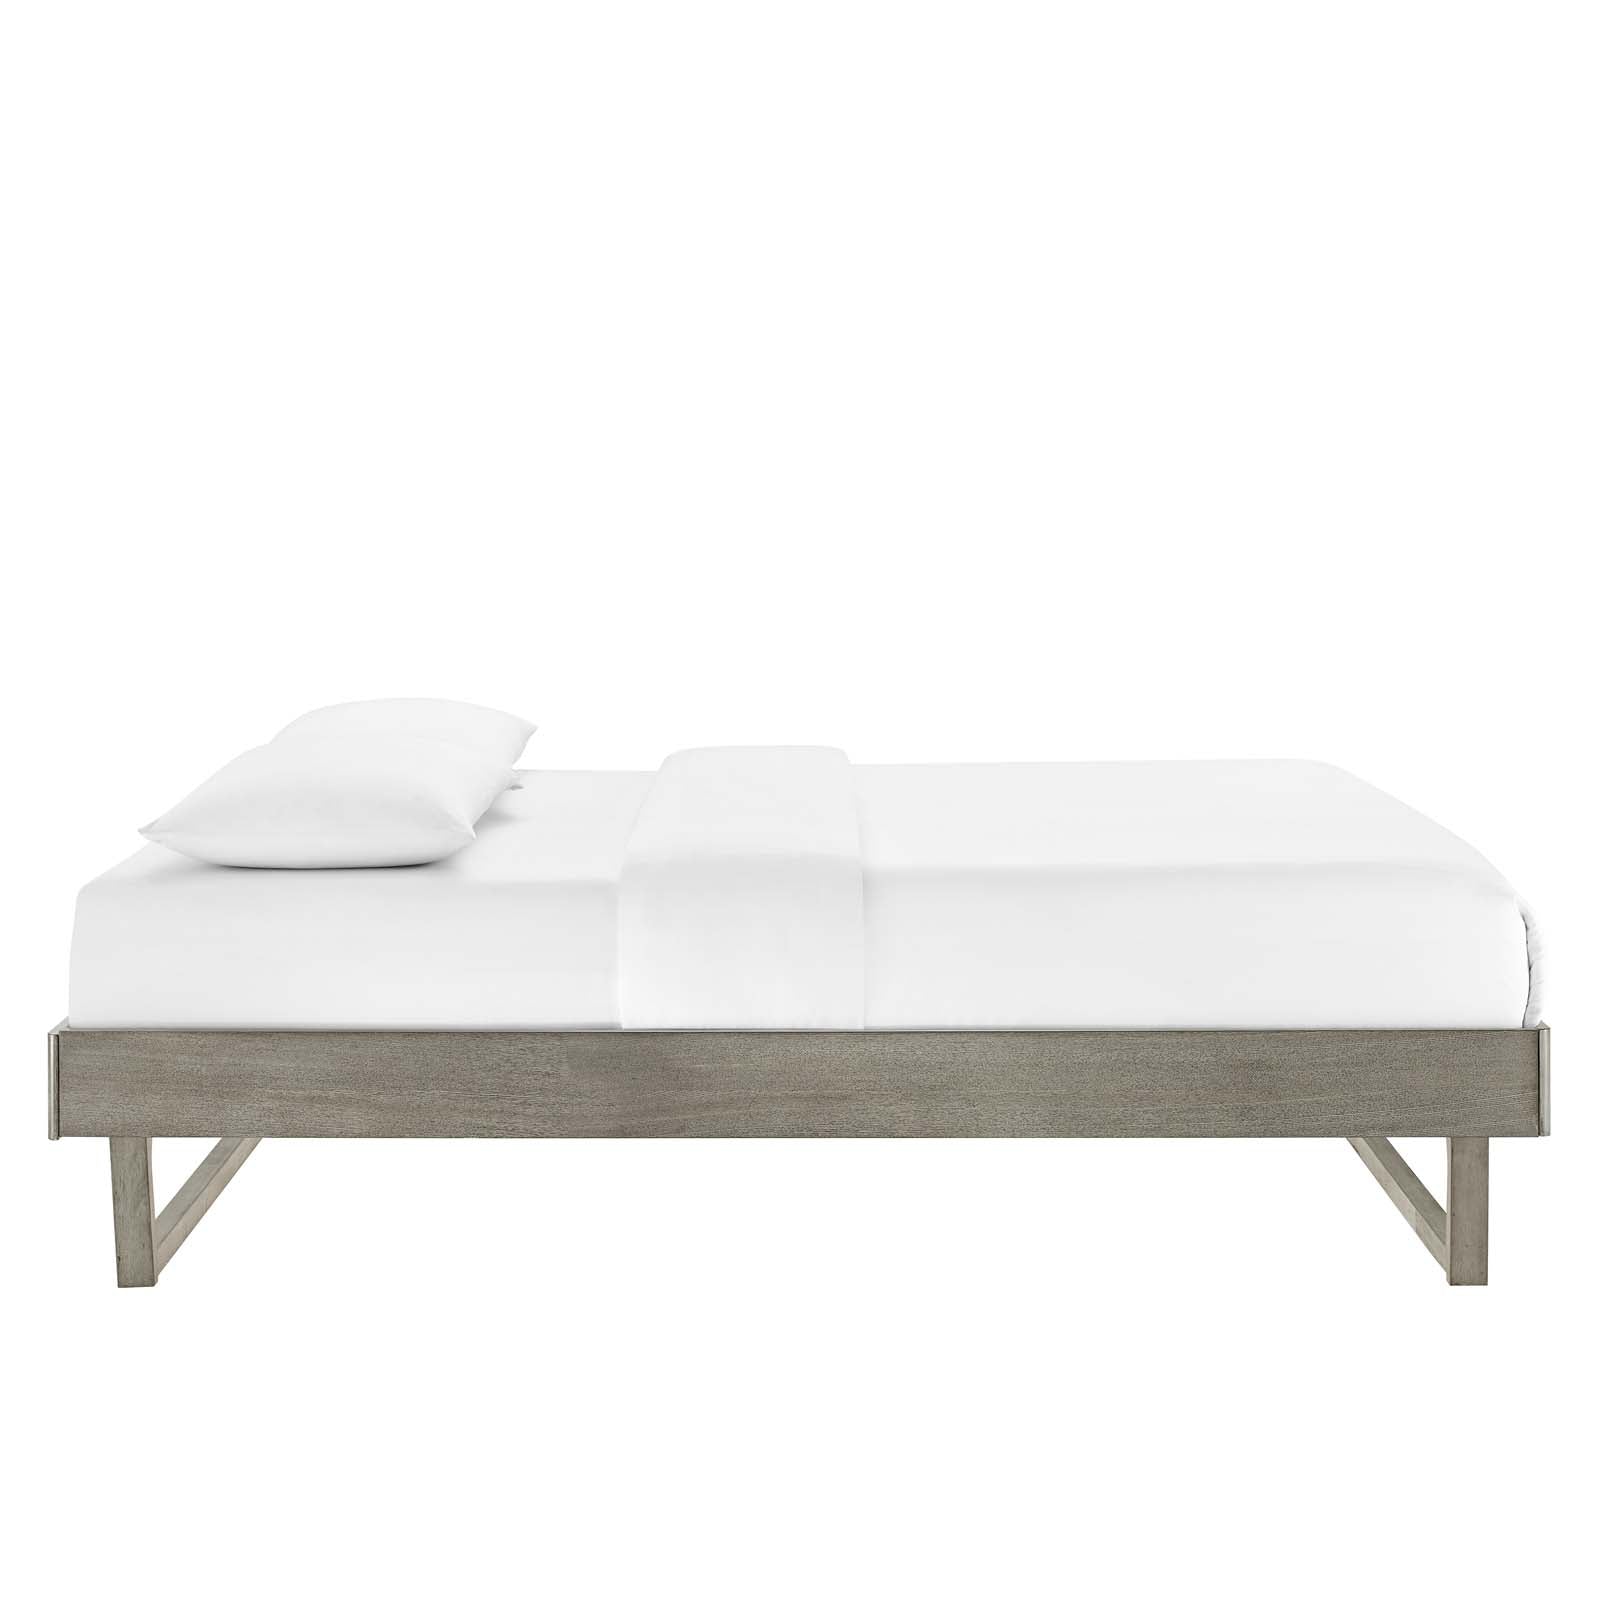 Modway Beds - Billie Queen Wood Platform Bed Frame Gray